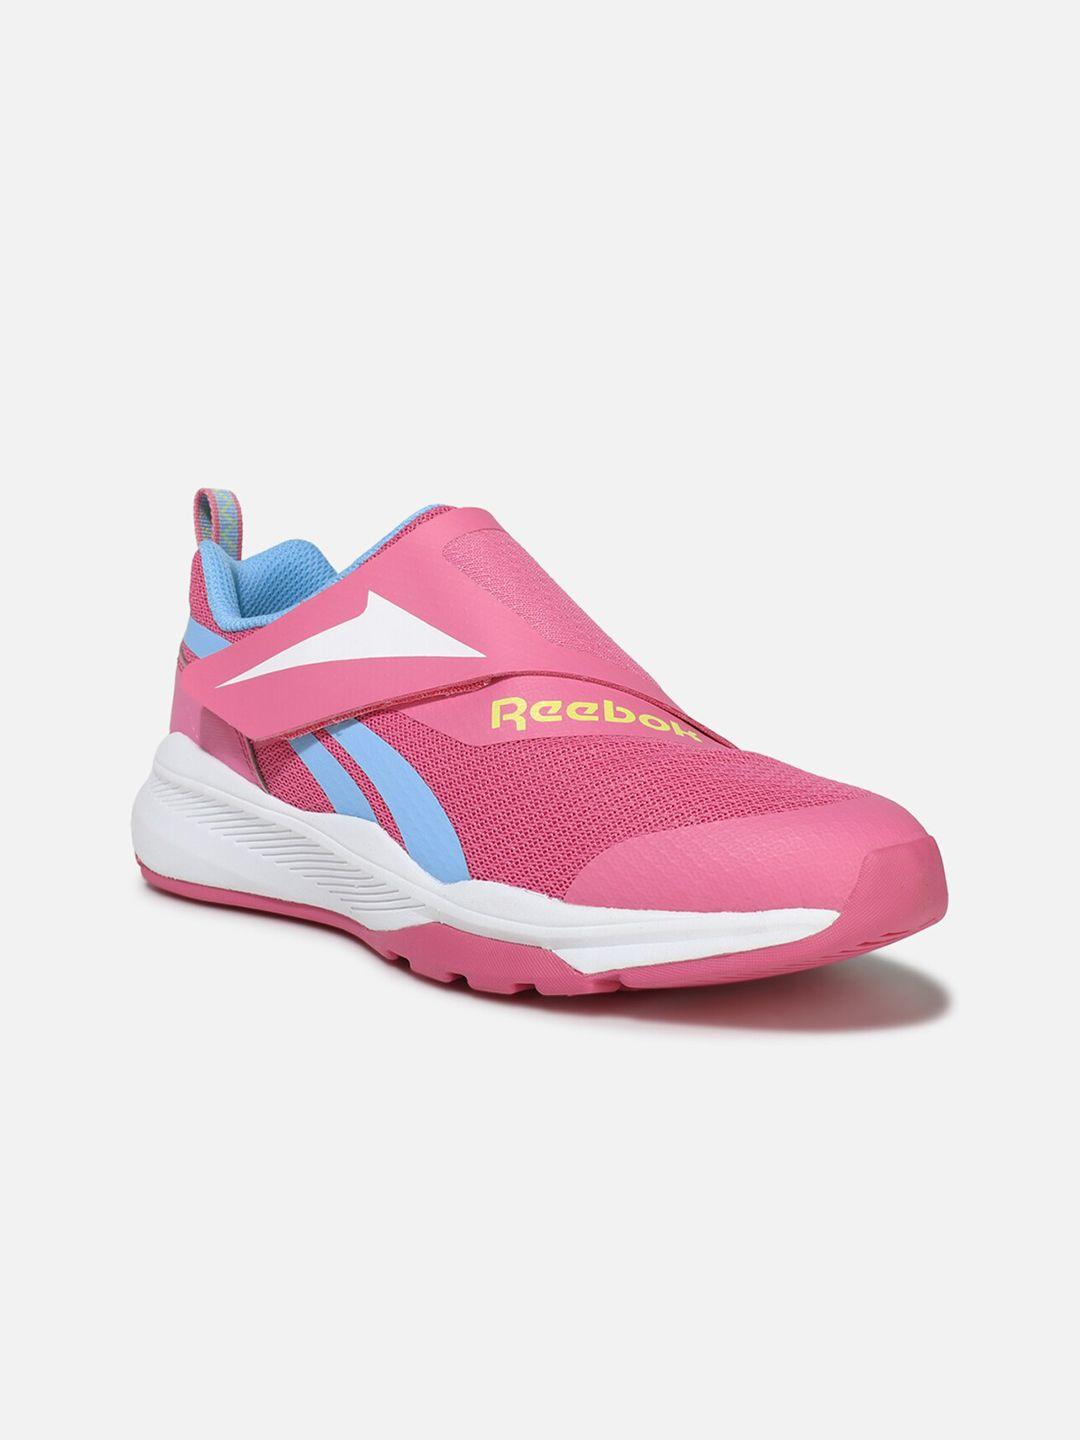 reebok-girls-equal-fit-running-shoes